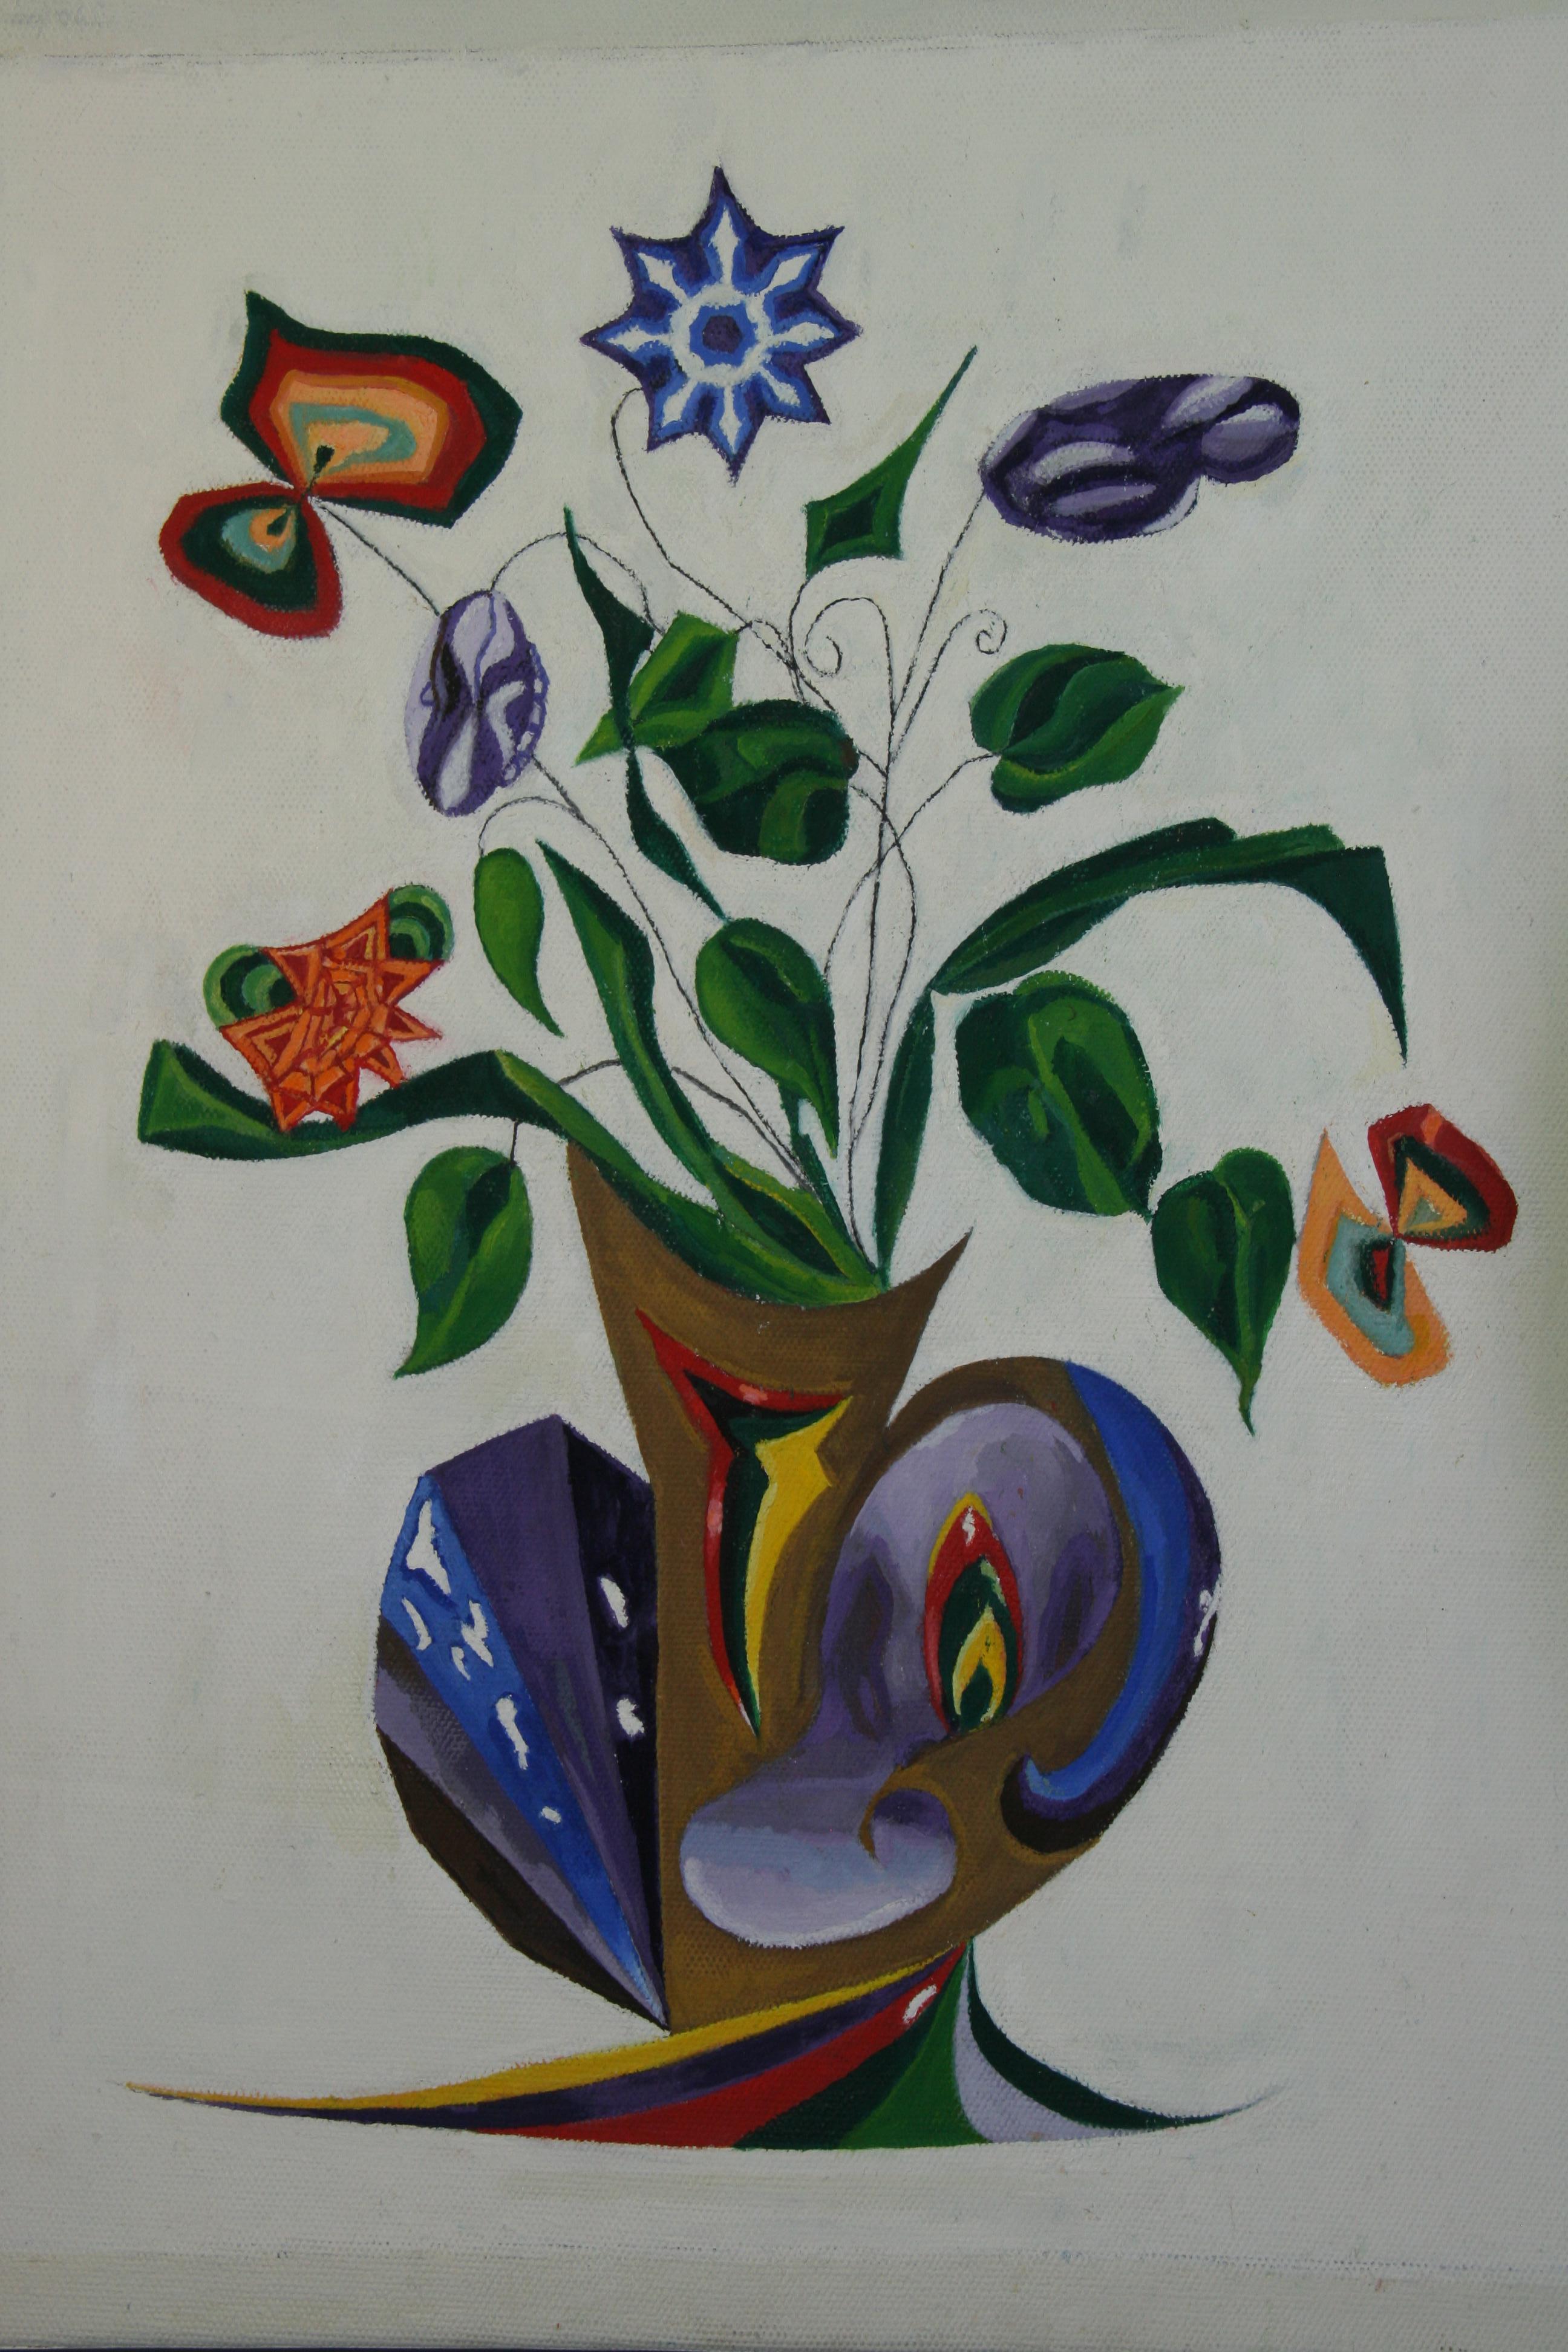 5036 Vintage abstract flower arrangement
Signed on verso